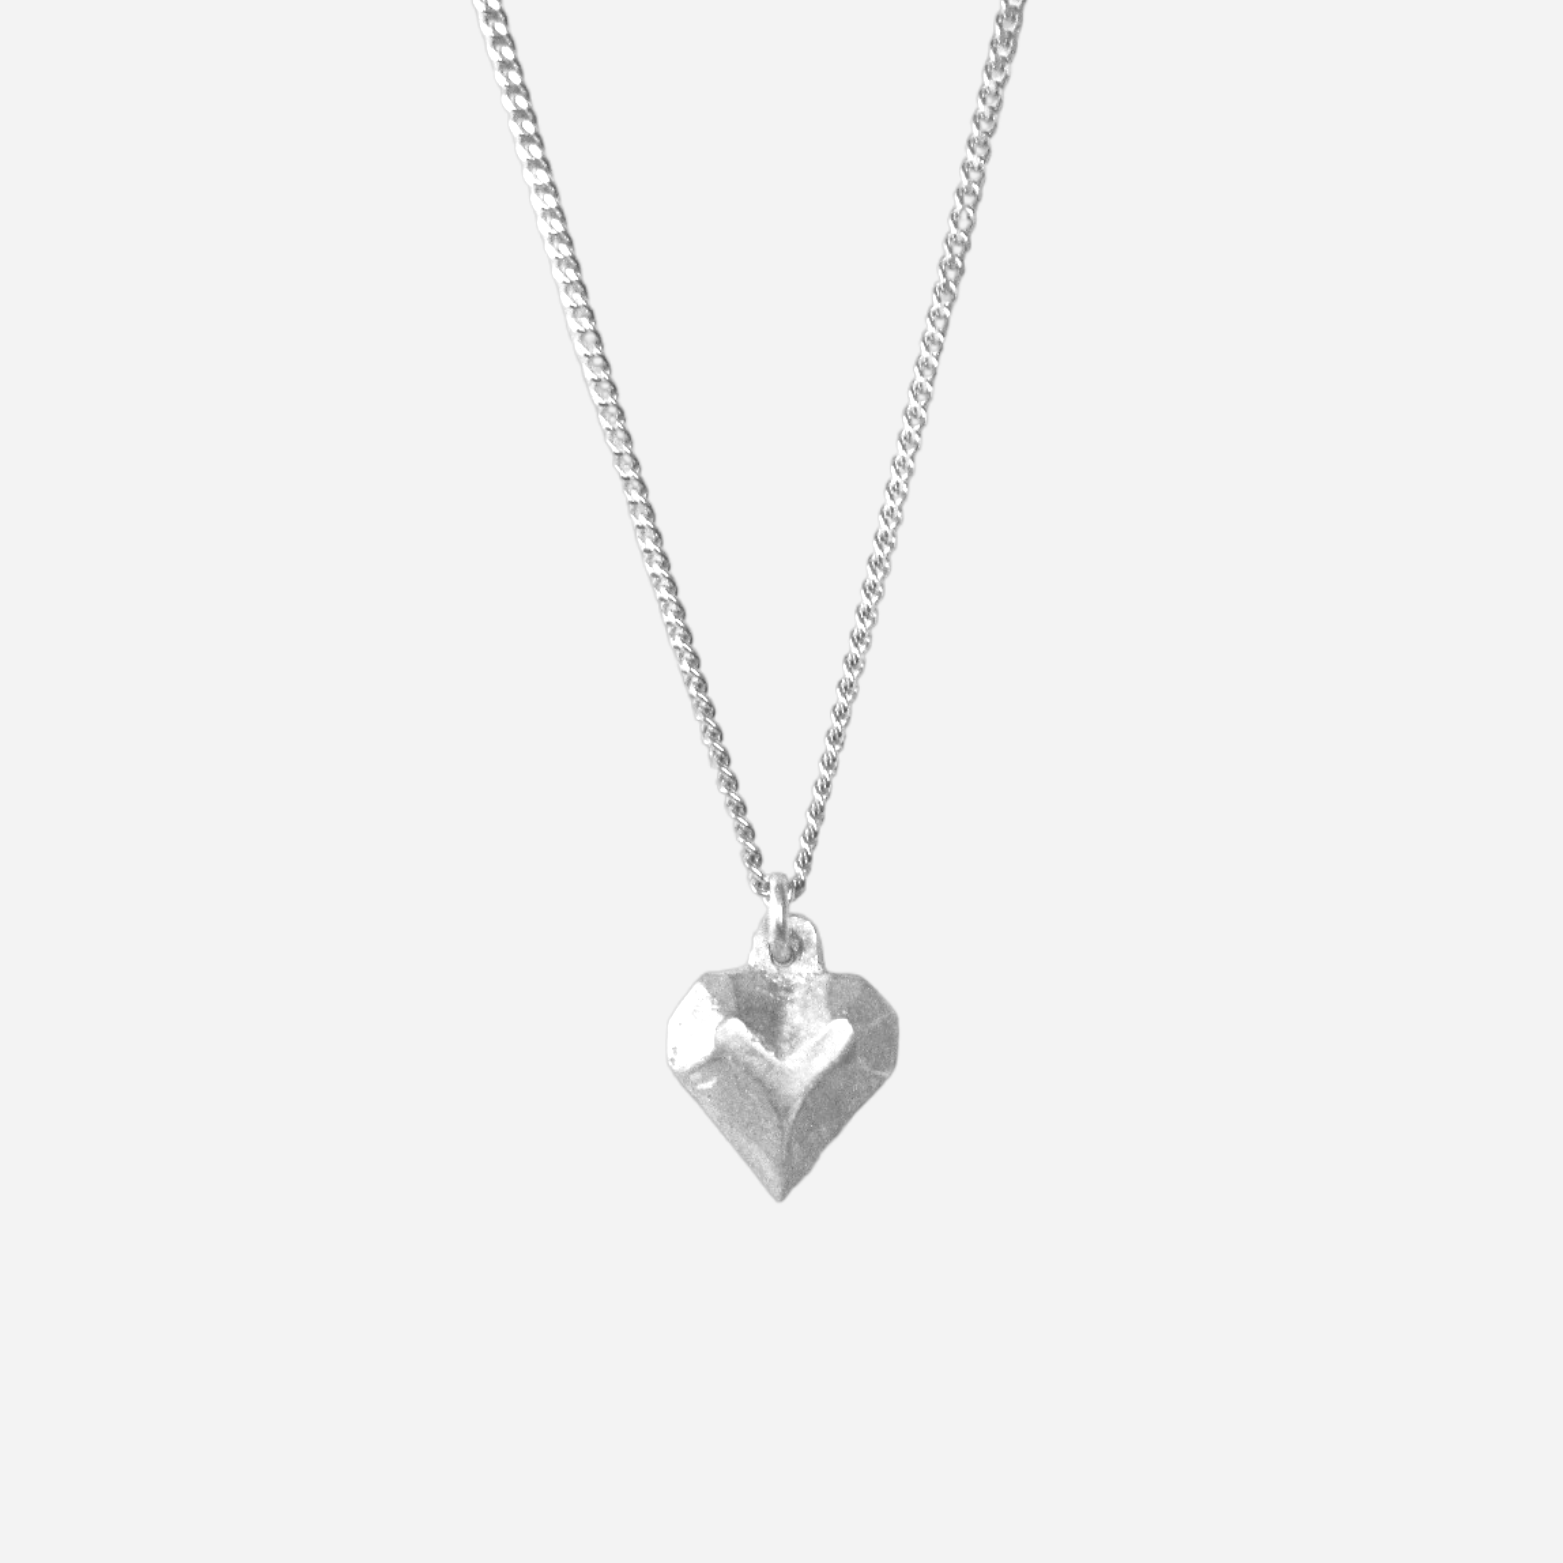 A heart necklace – Atend Studios